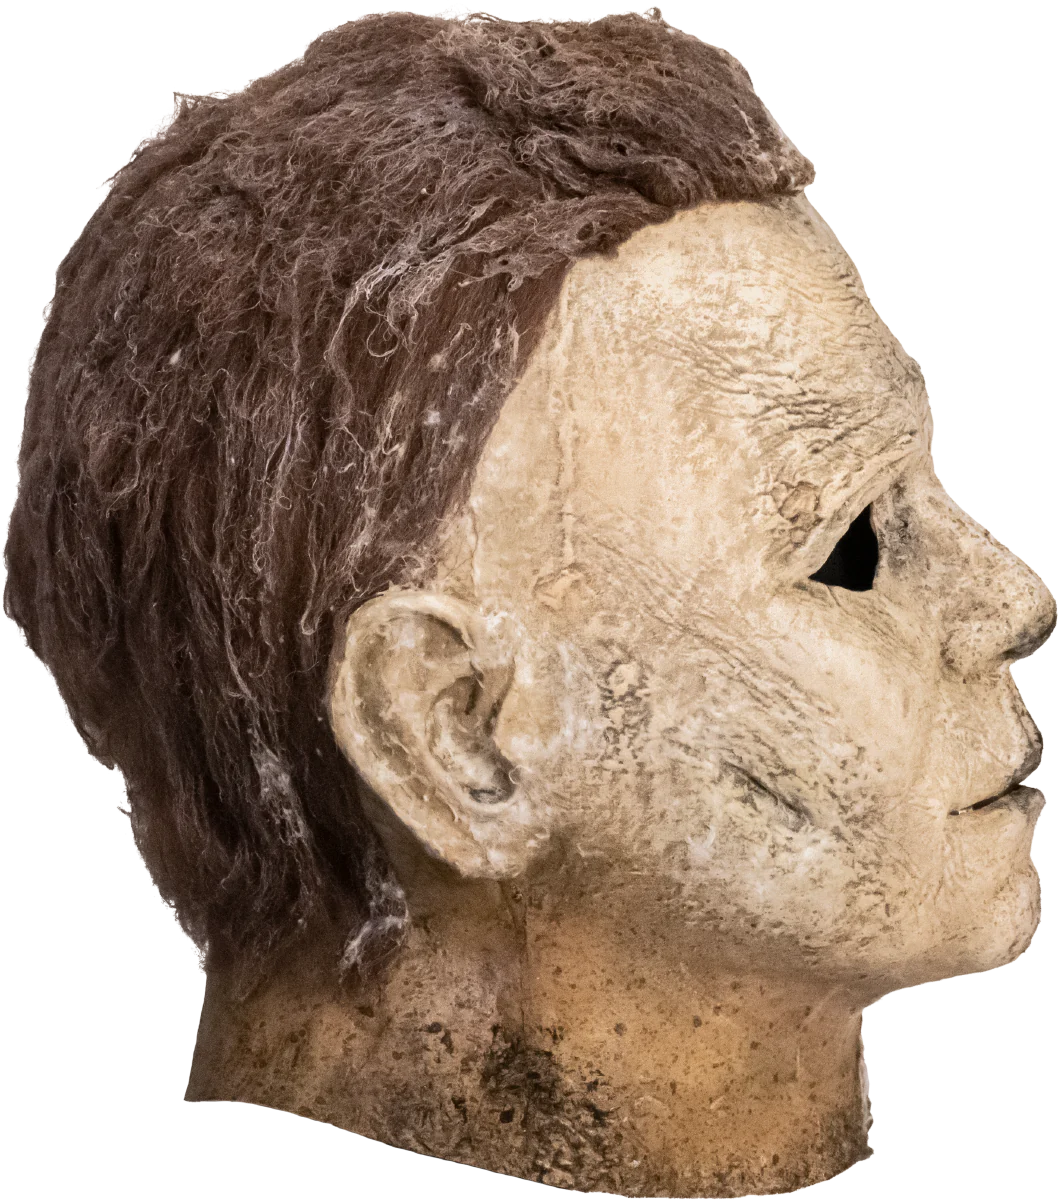 Halloween Ends - Michael Myers Mask